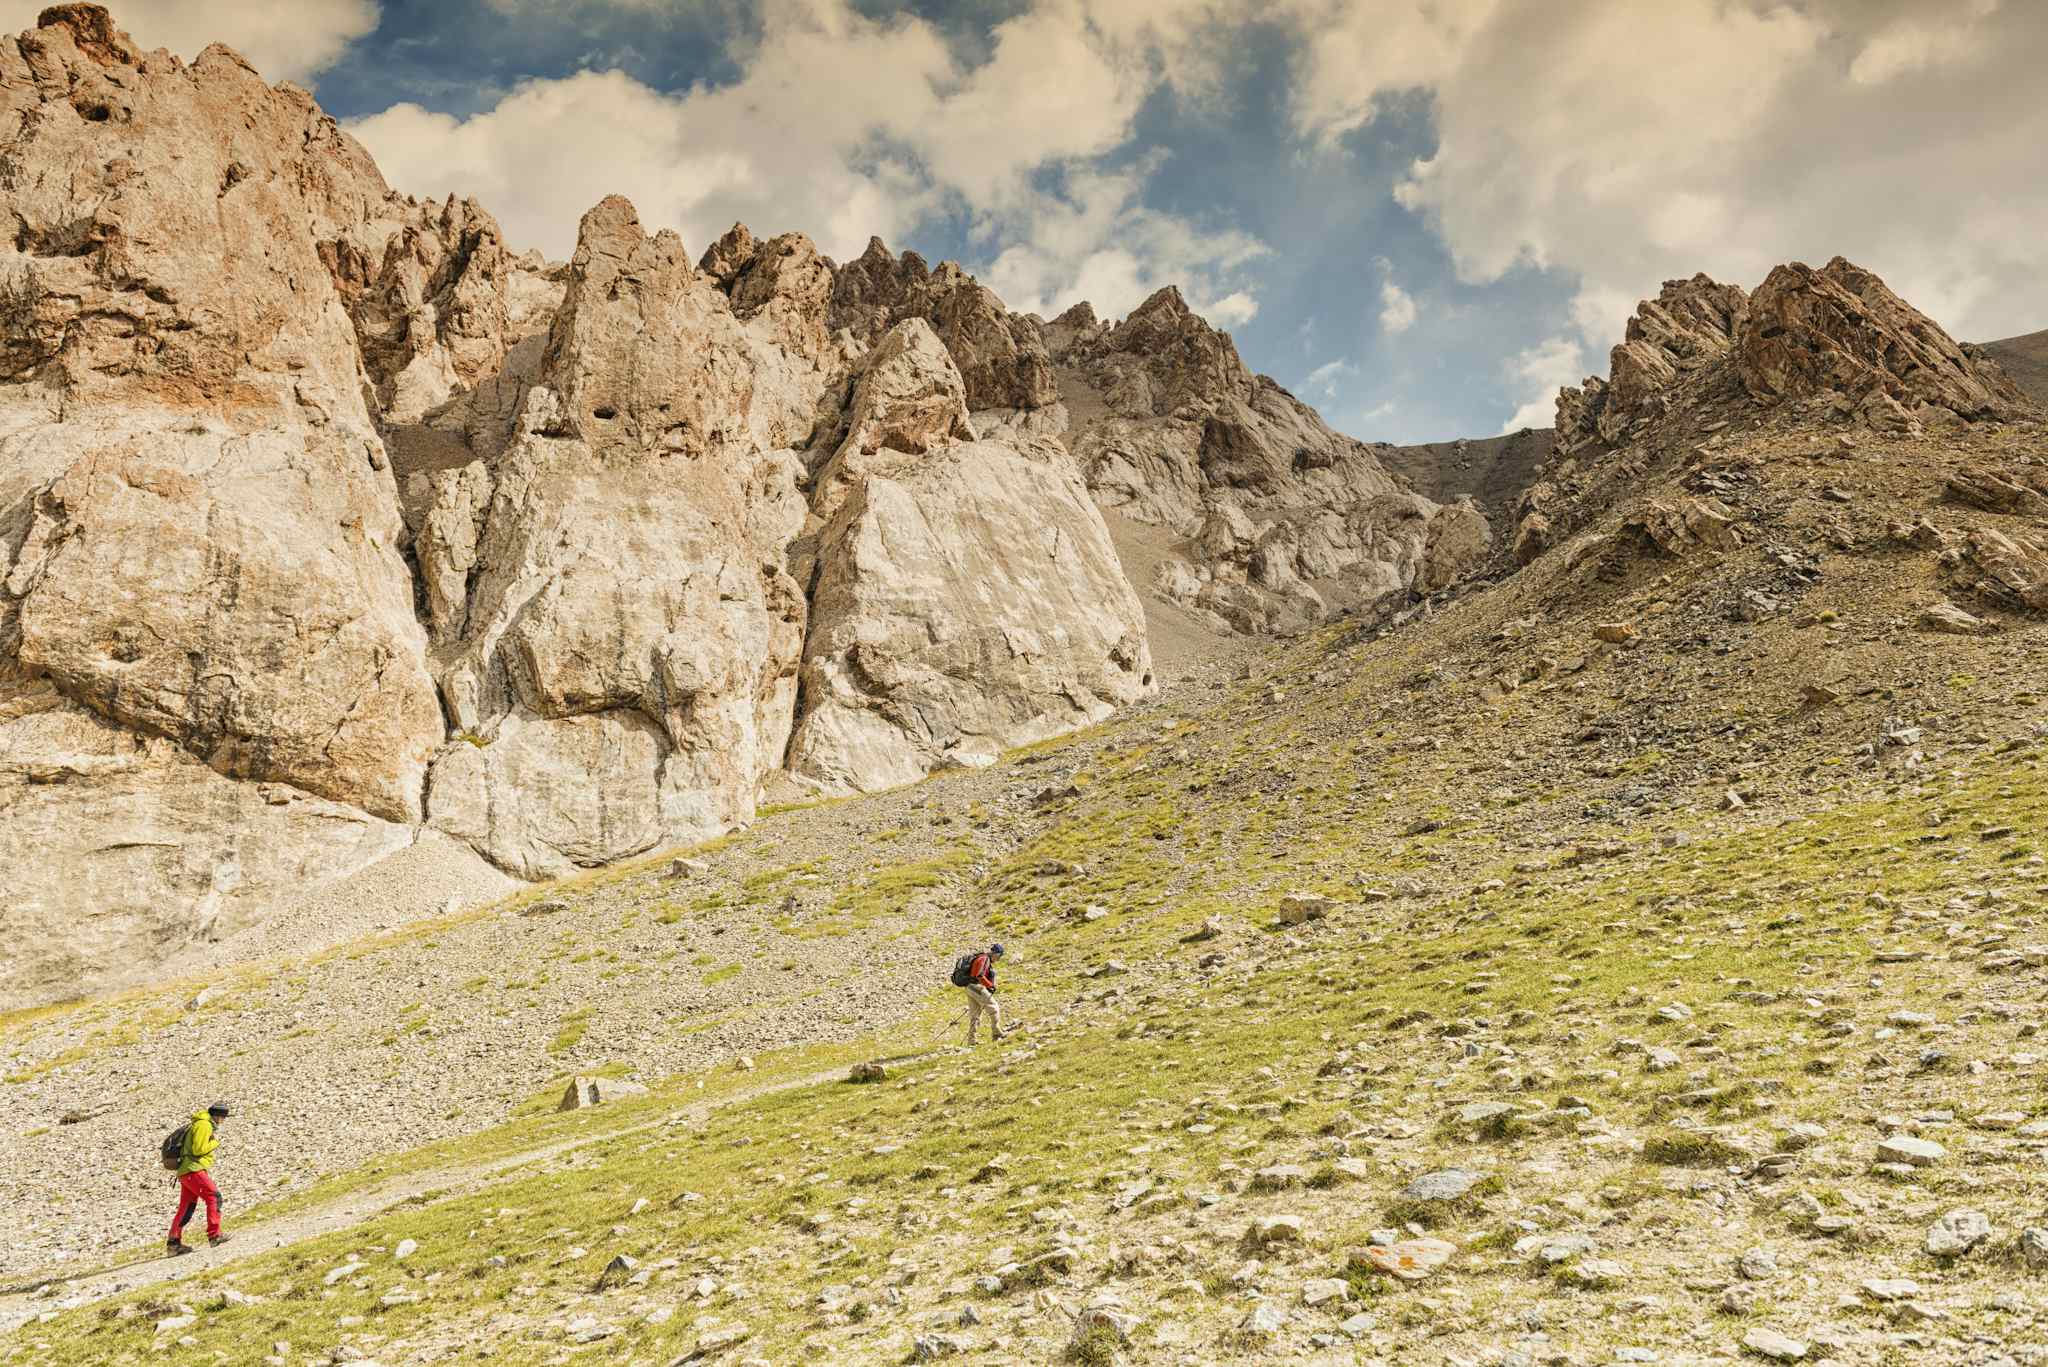 Trekking through the Jukku Valley in Kyrgyzstan. Photo: Nomad's Land.